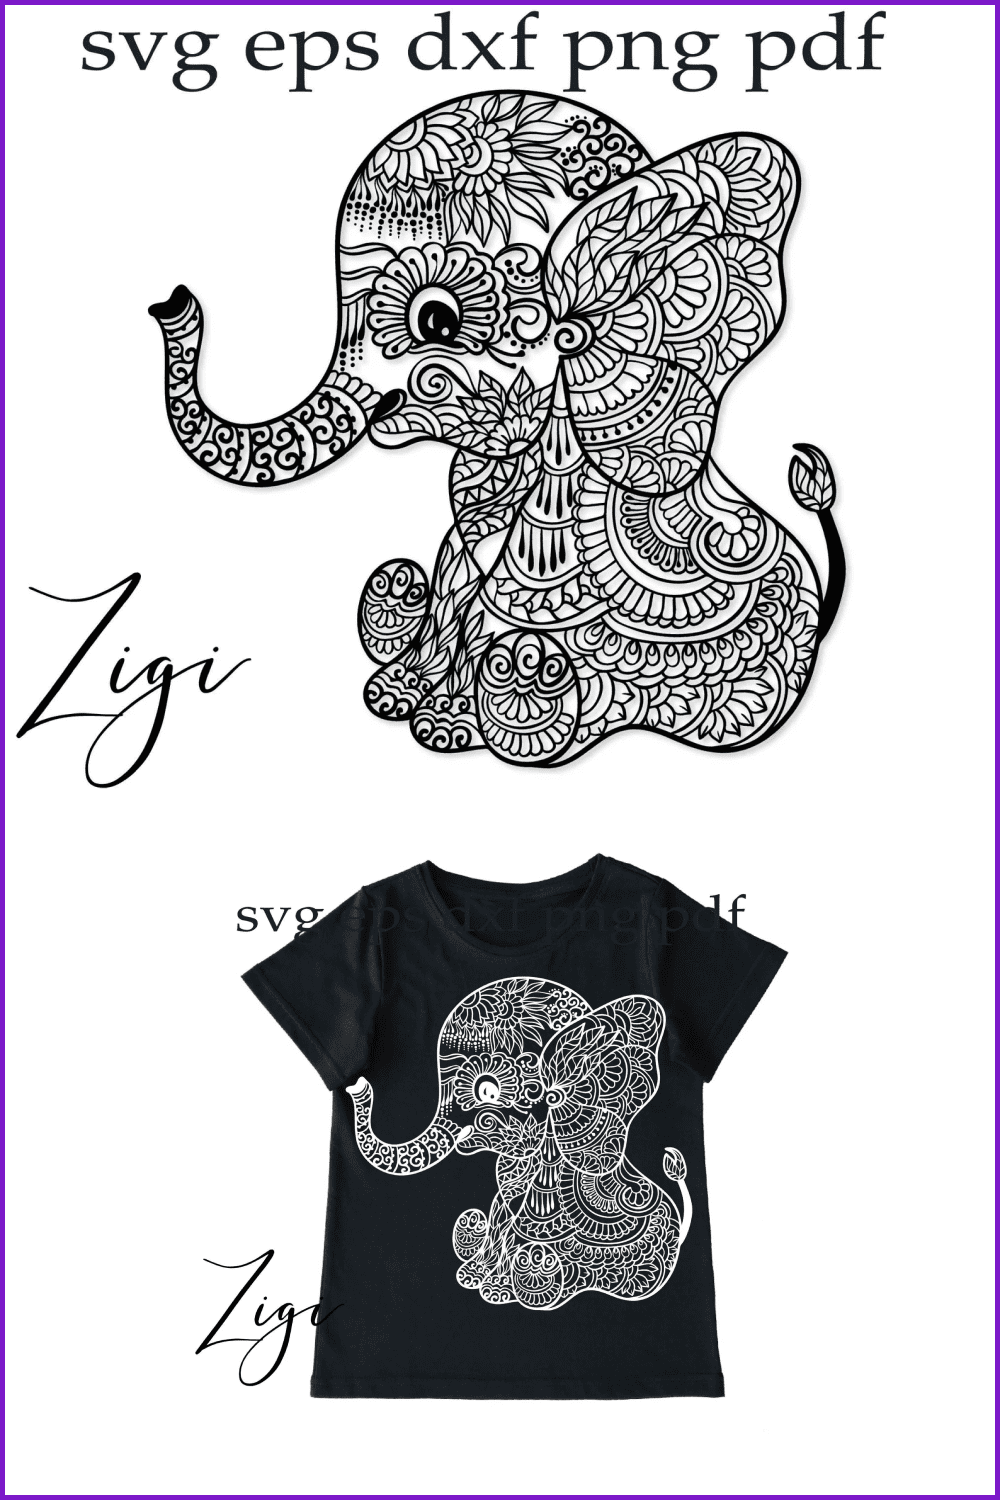 Cute elephant sketch in mandala style.